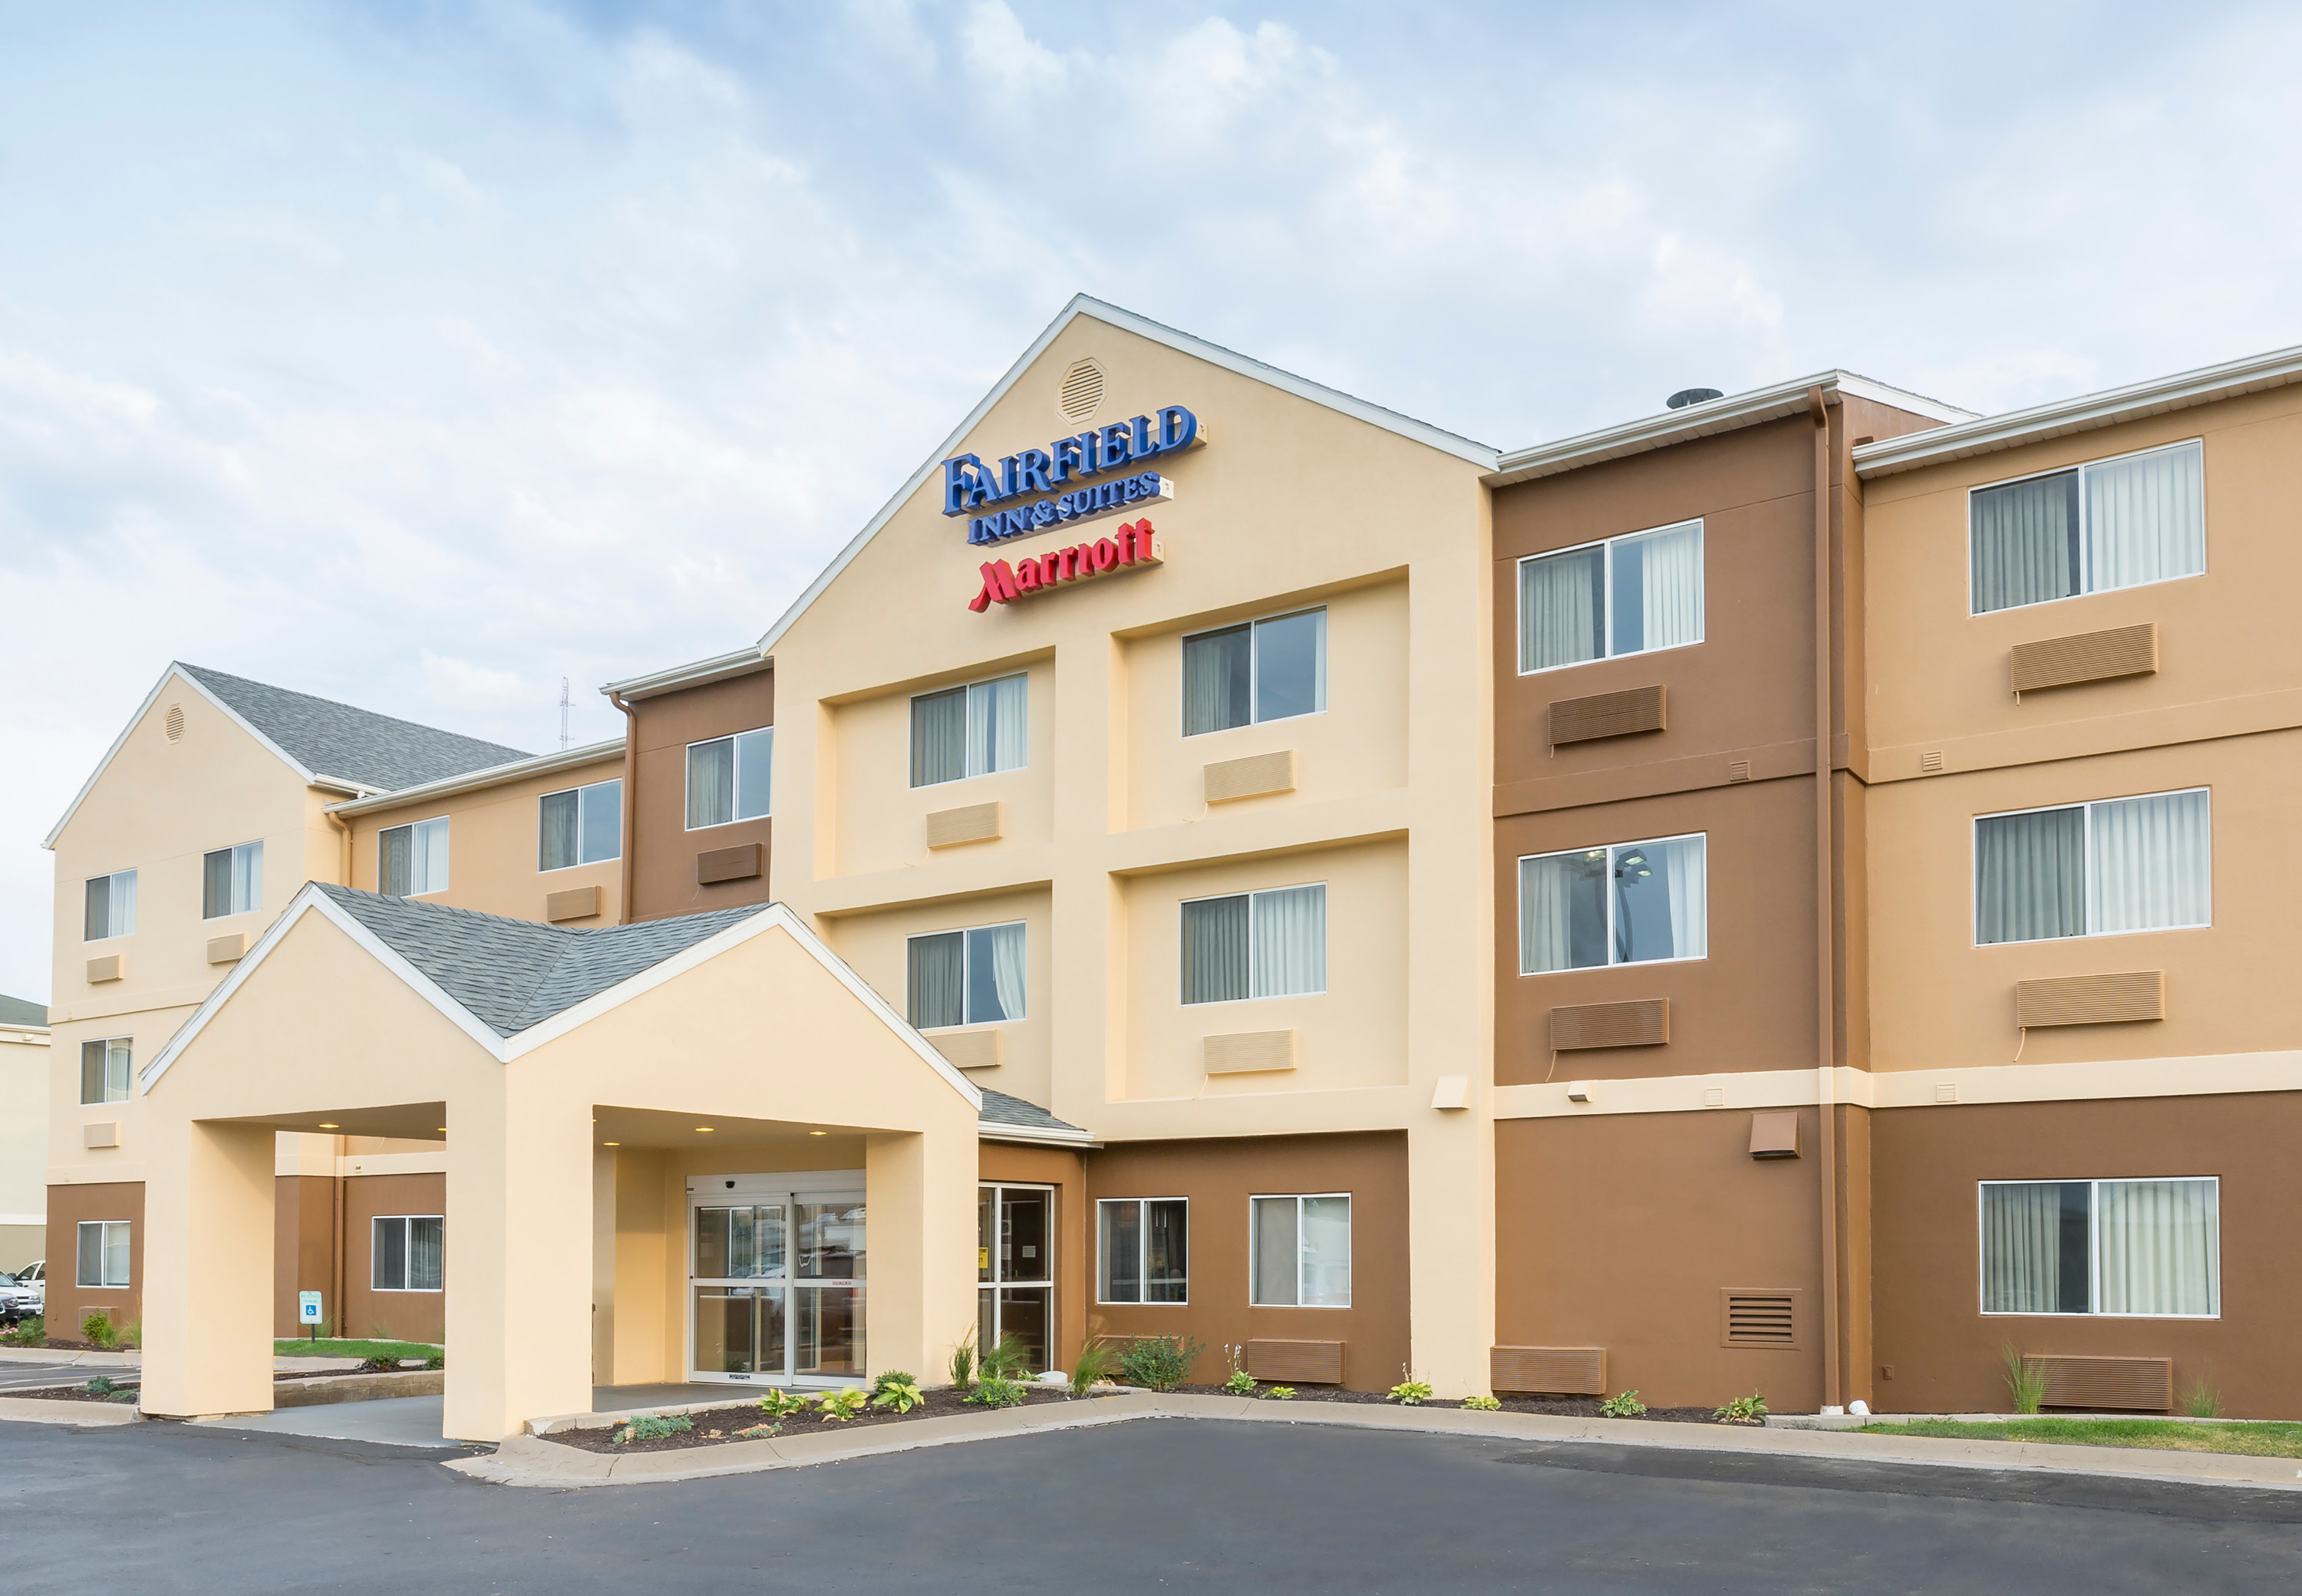 Photo of Fairfield Inn & Suites by Marriott Lincoln, Lincoln, NE